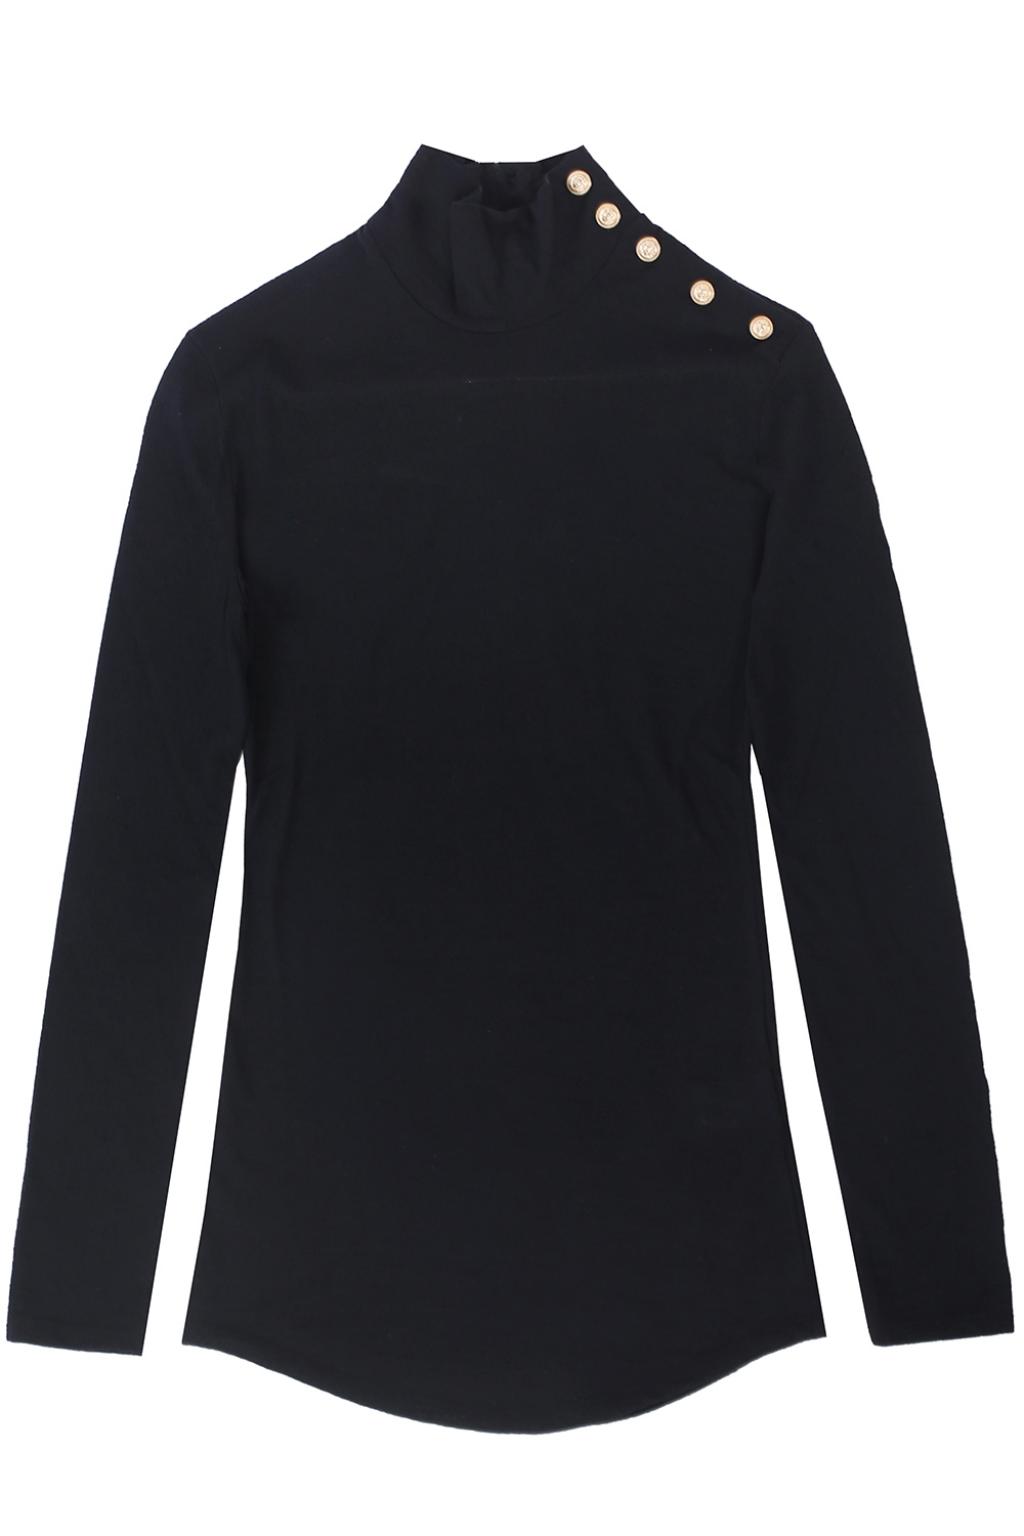 Balmain Turtleneck sweater with metal buttons | Women's Clothing